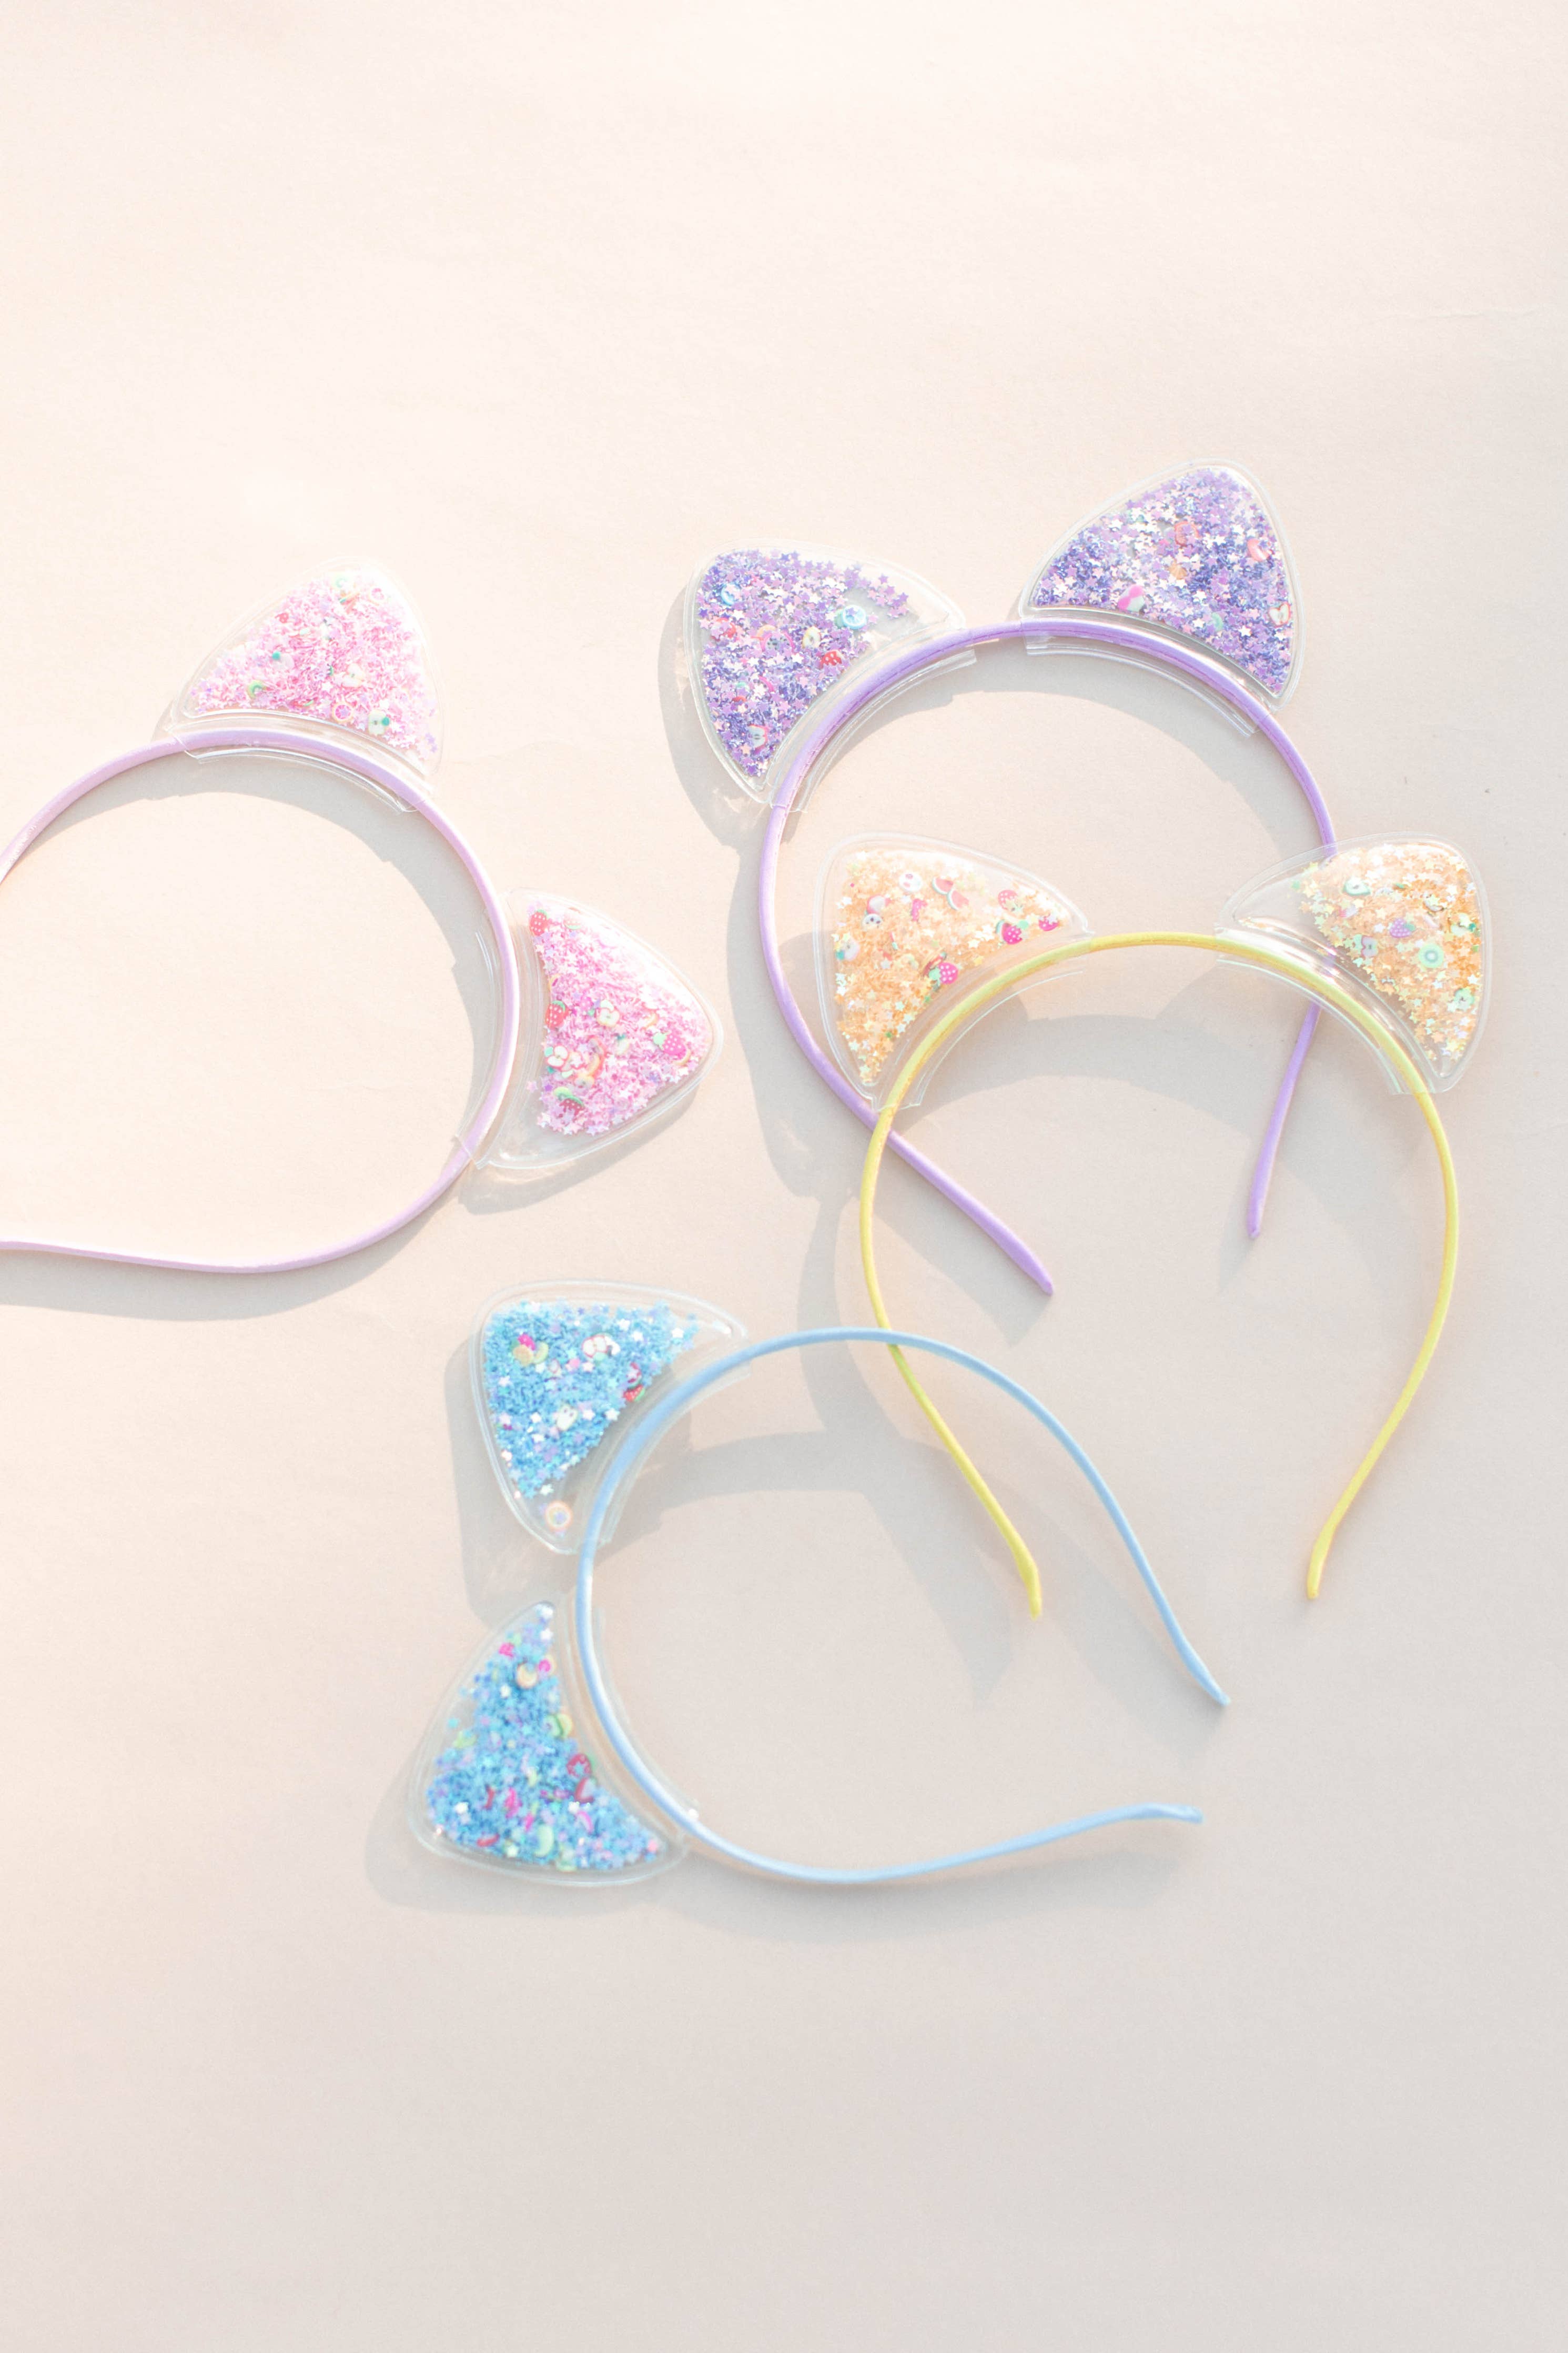 Confetti Cat Ears Headbands